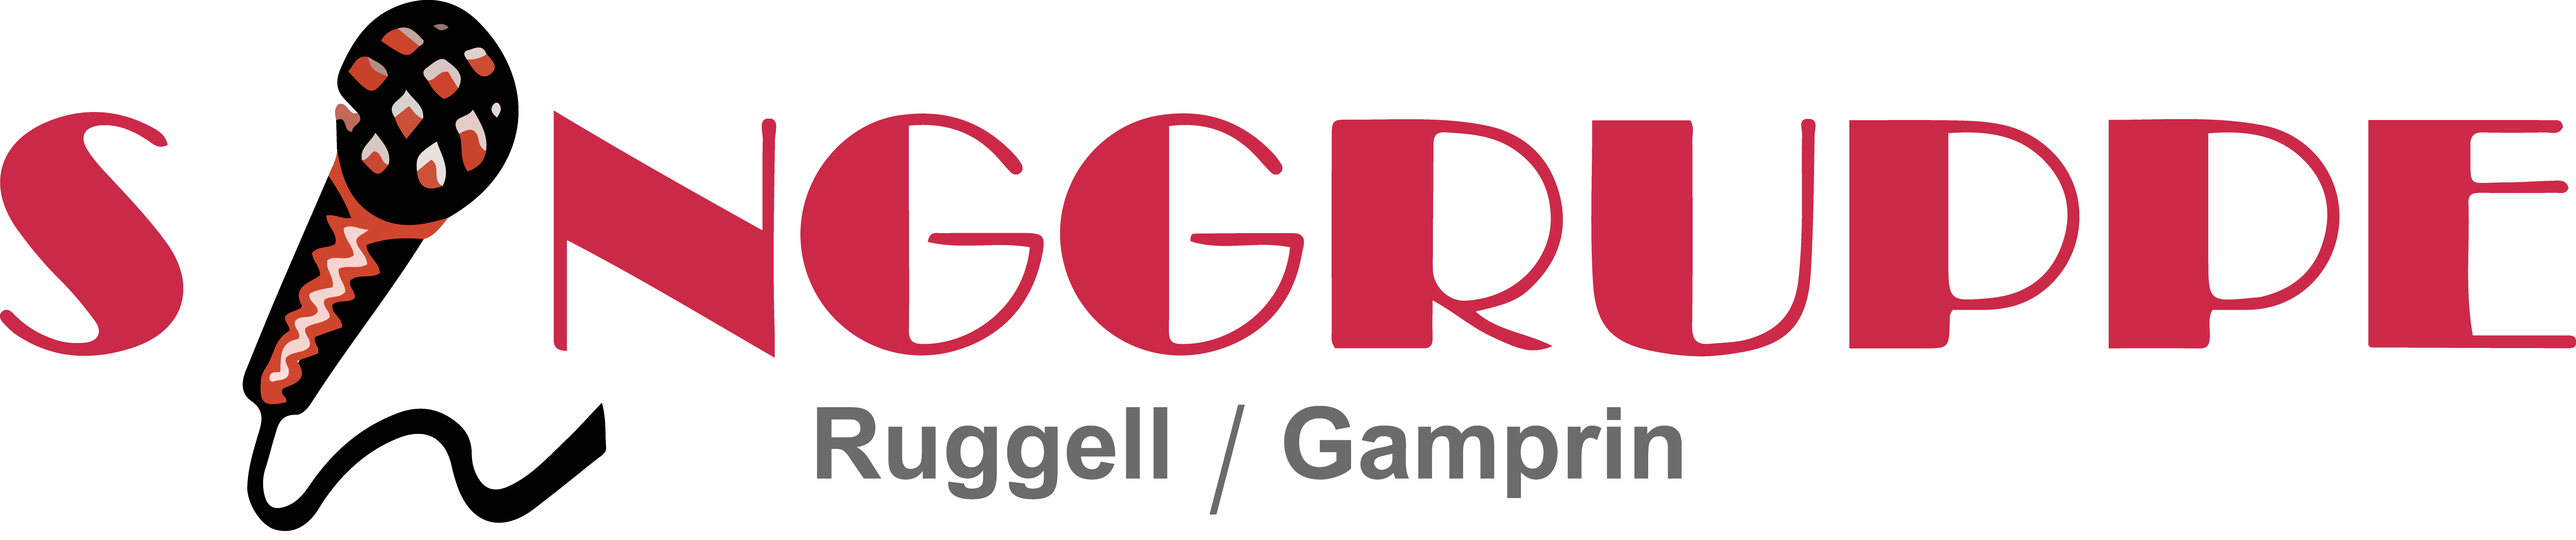 Singgruppe logo